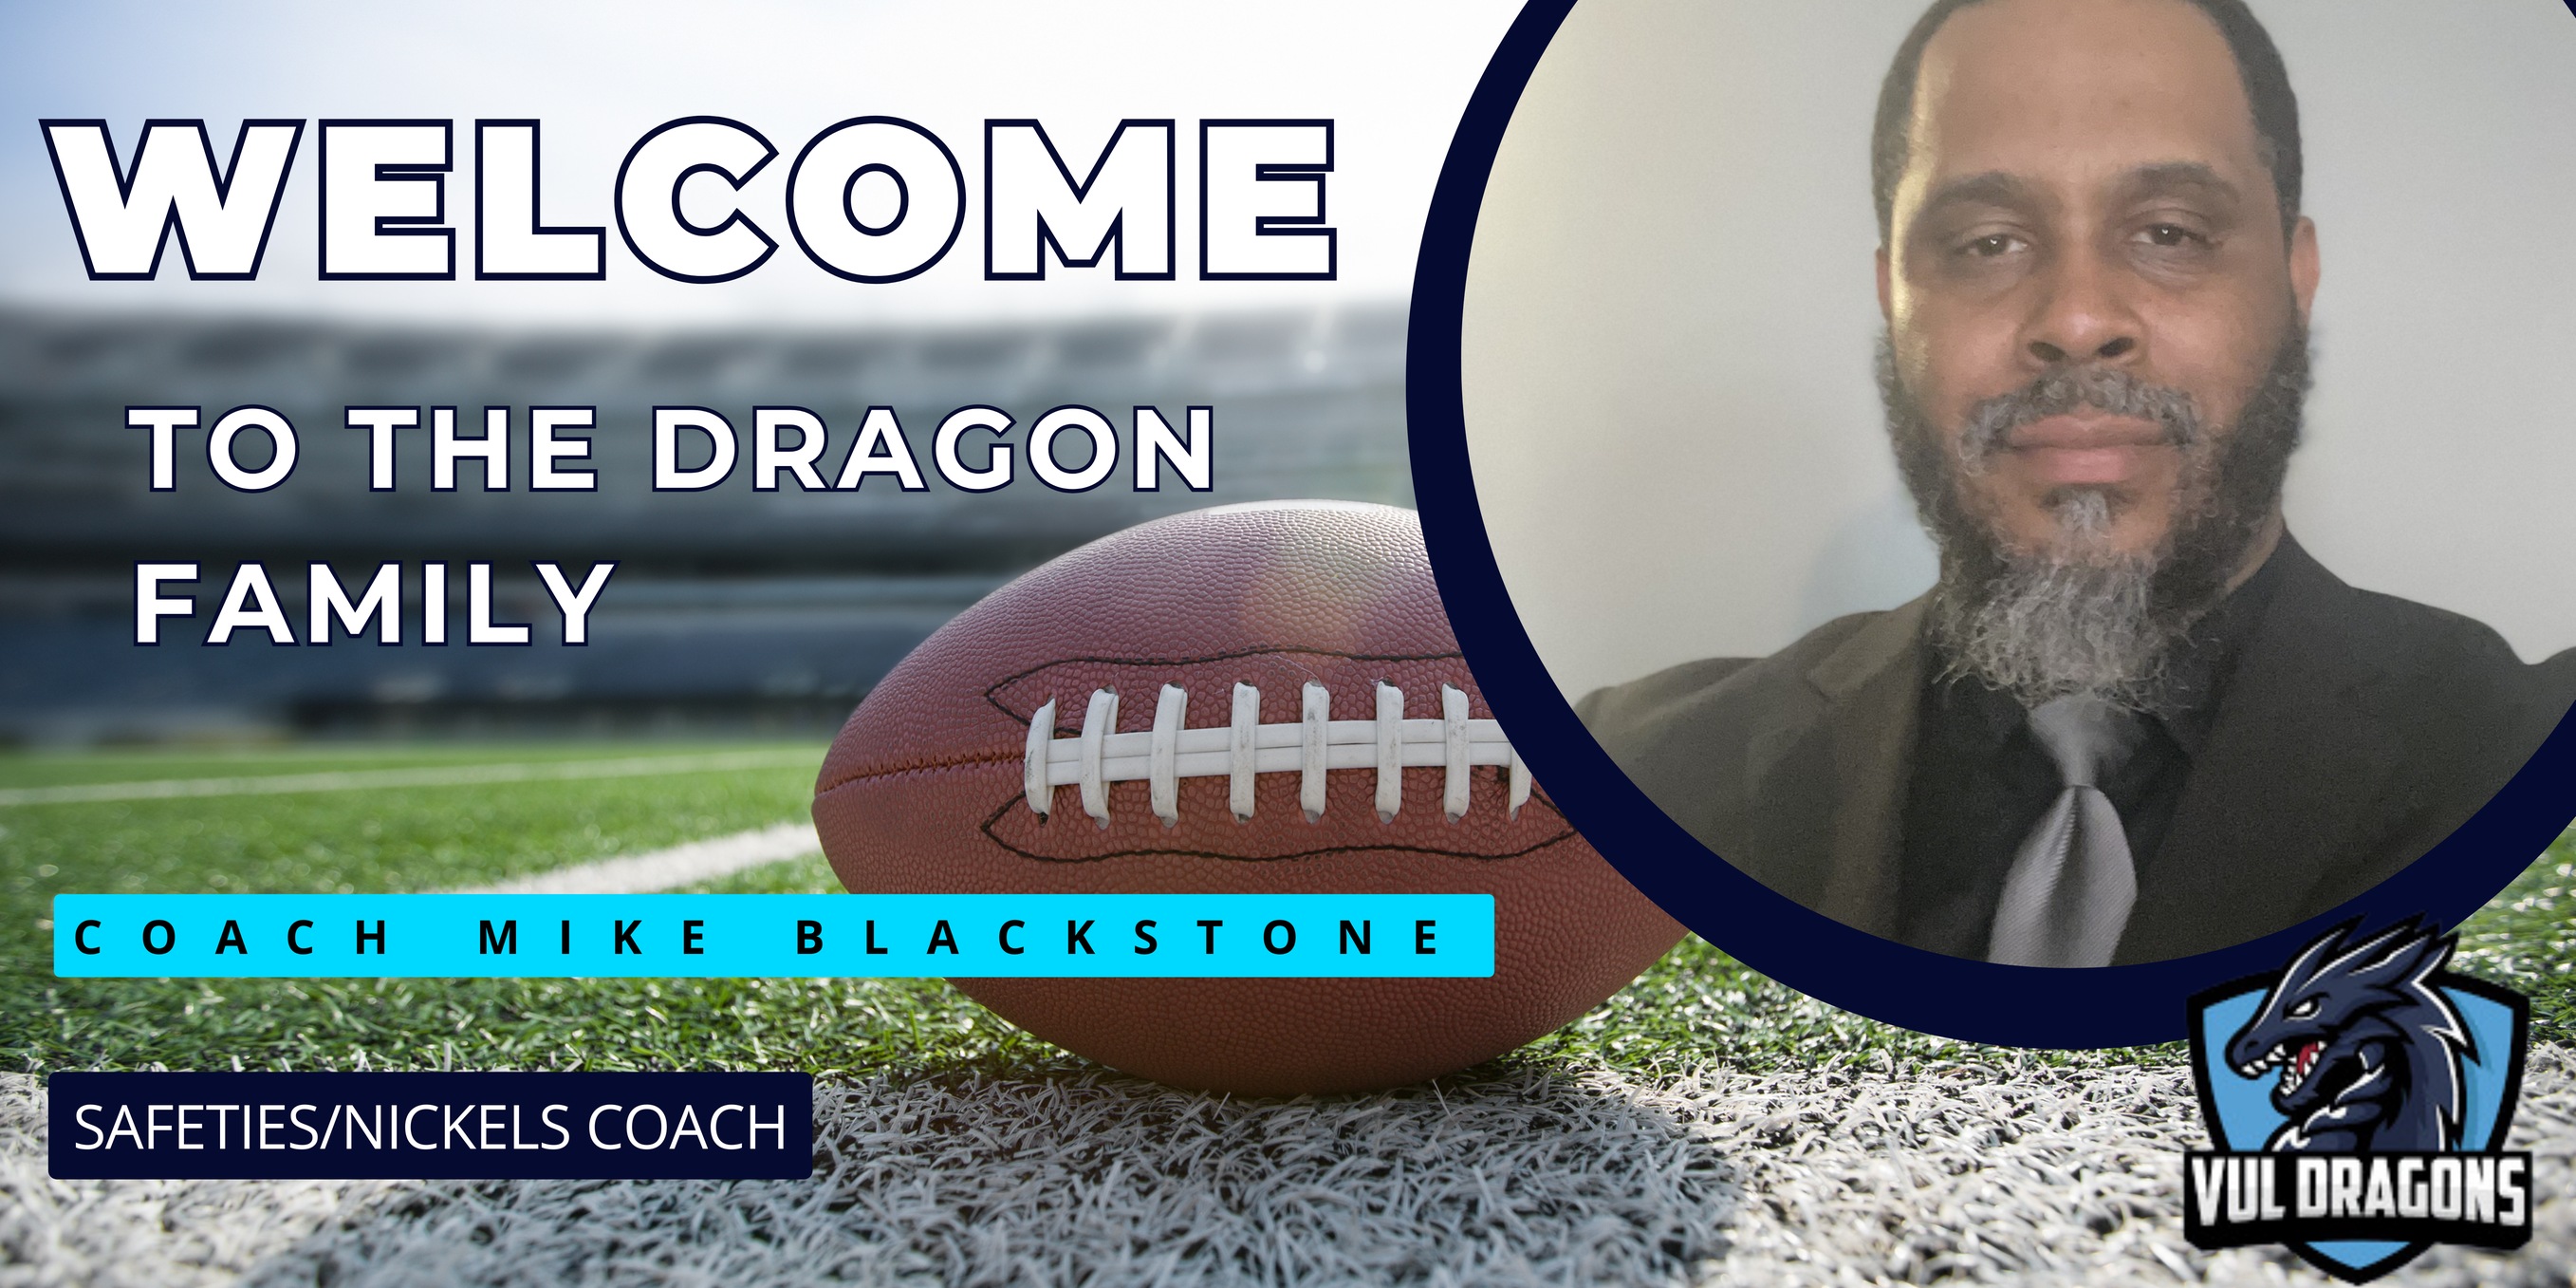 Congratulations Coach Blackstone